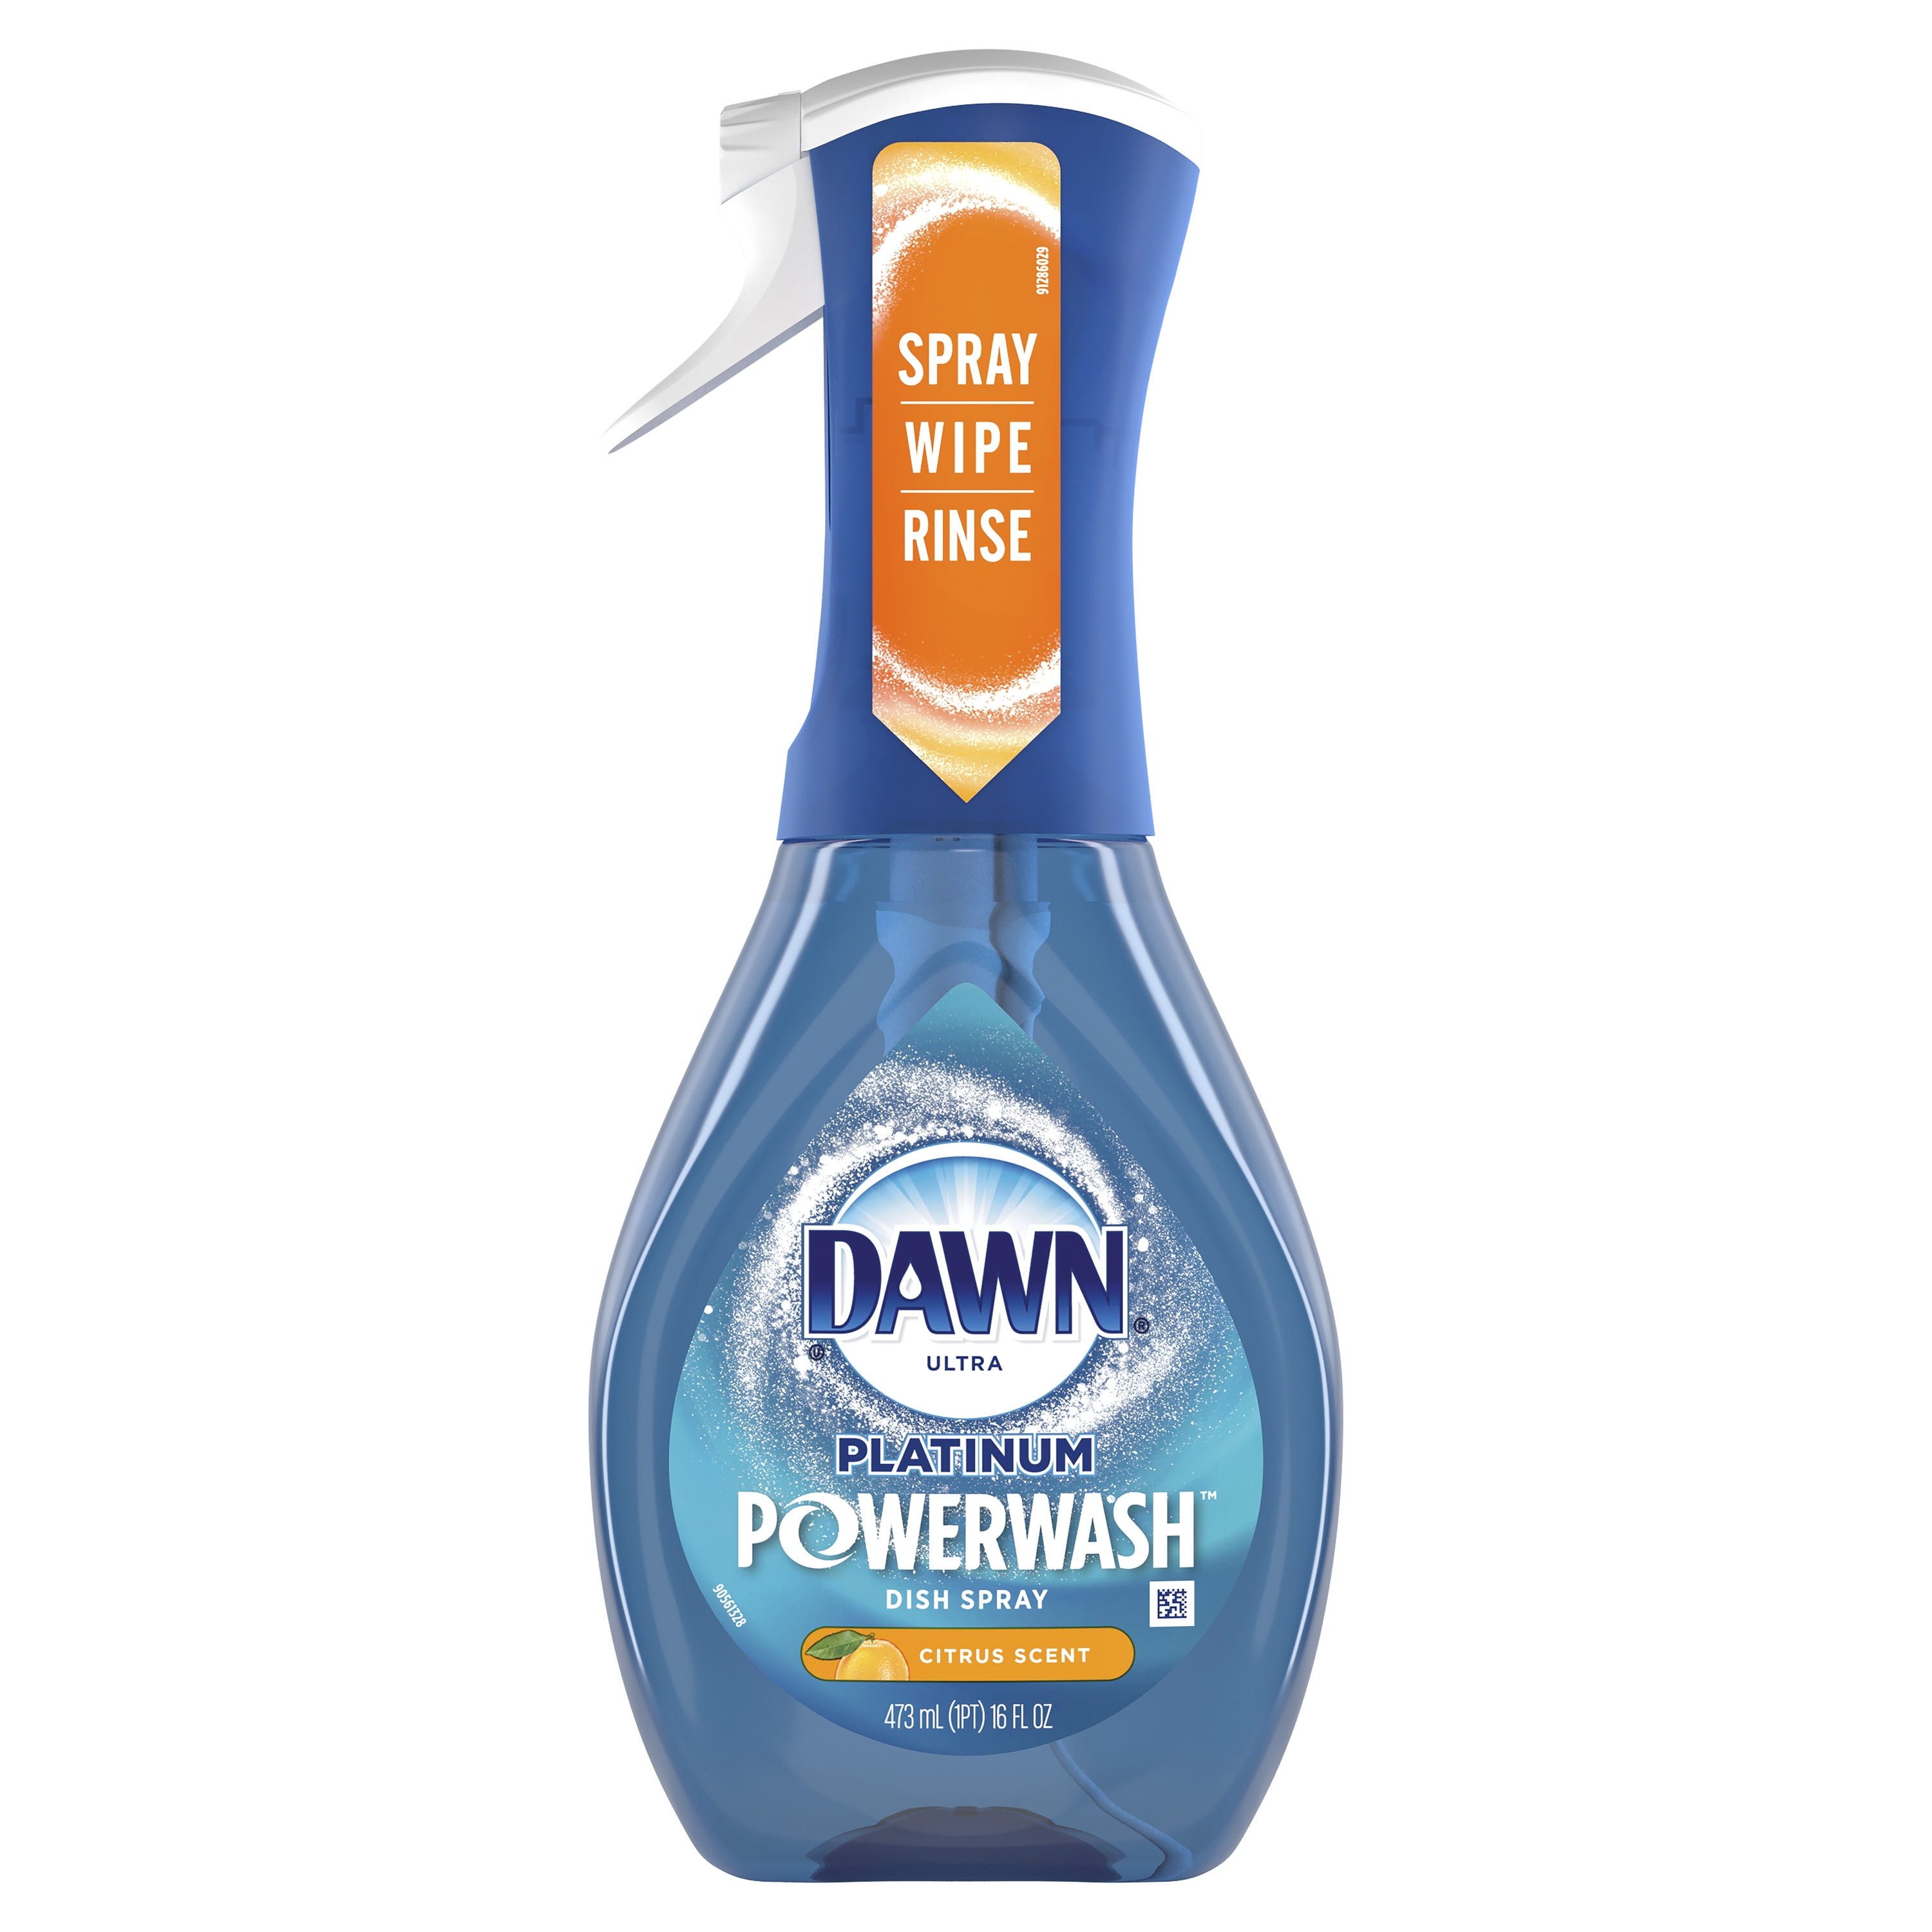 Dawn Powerwash Dish Spray Review 2023